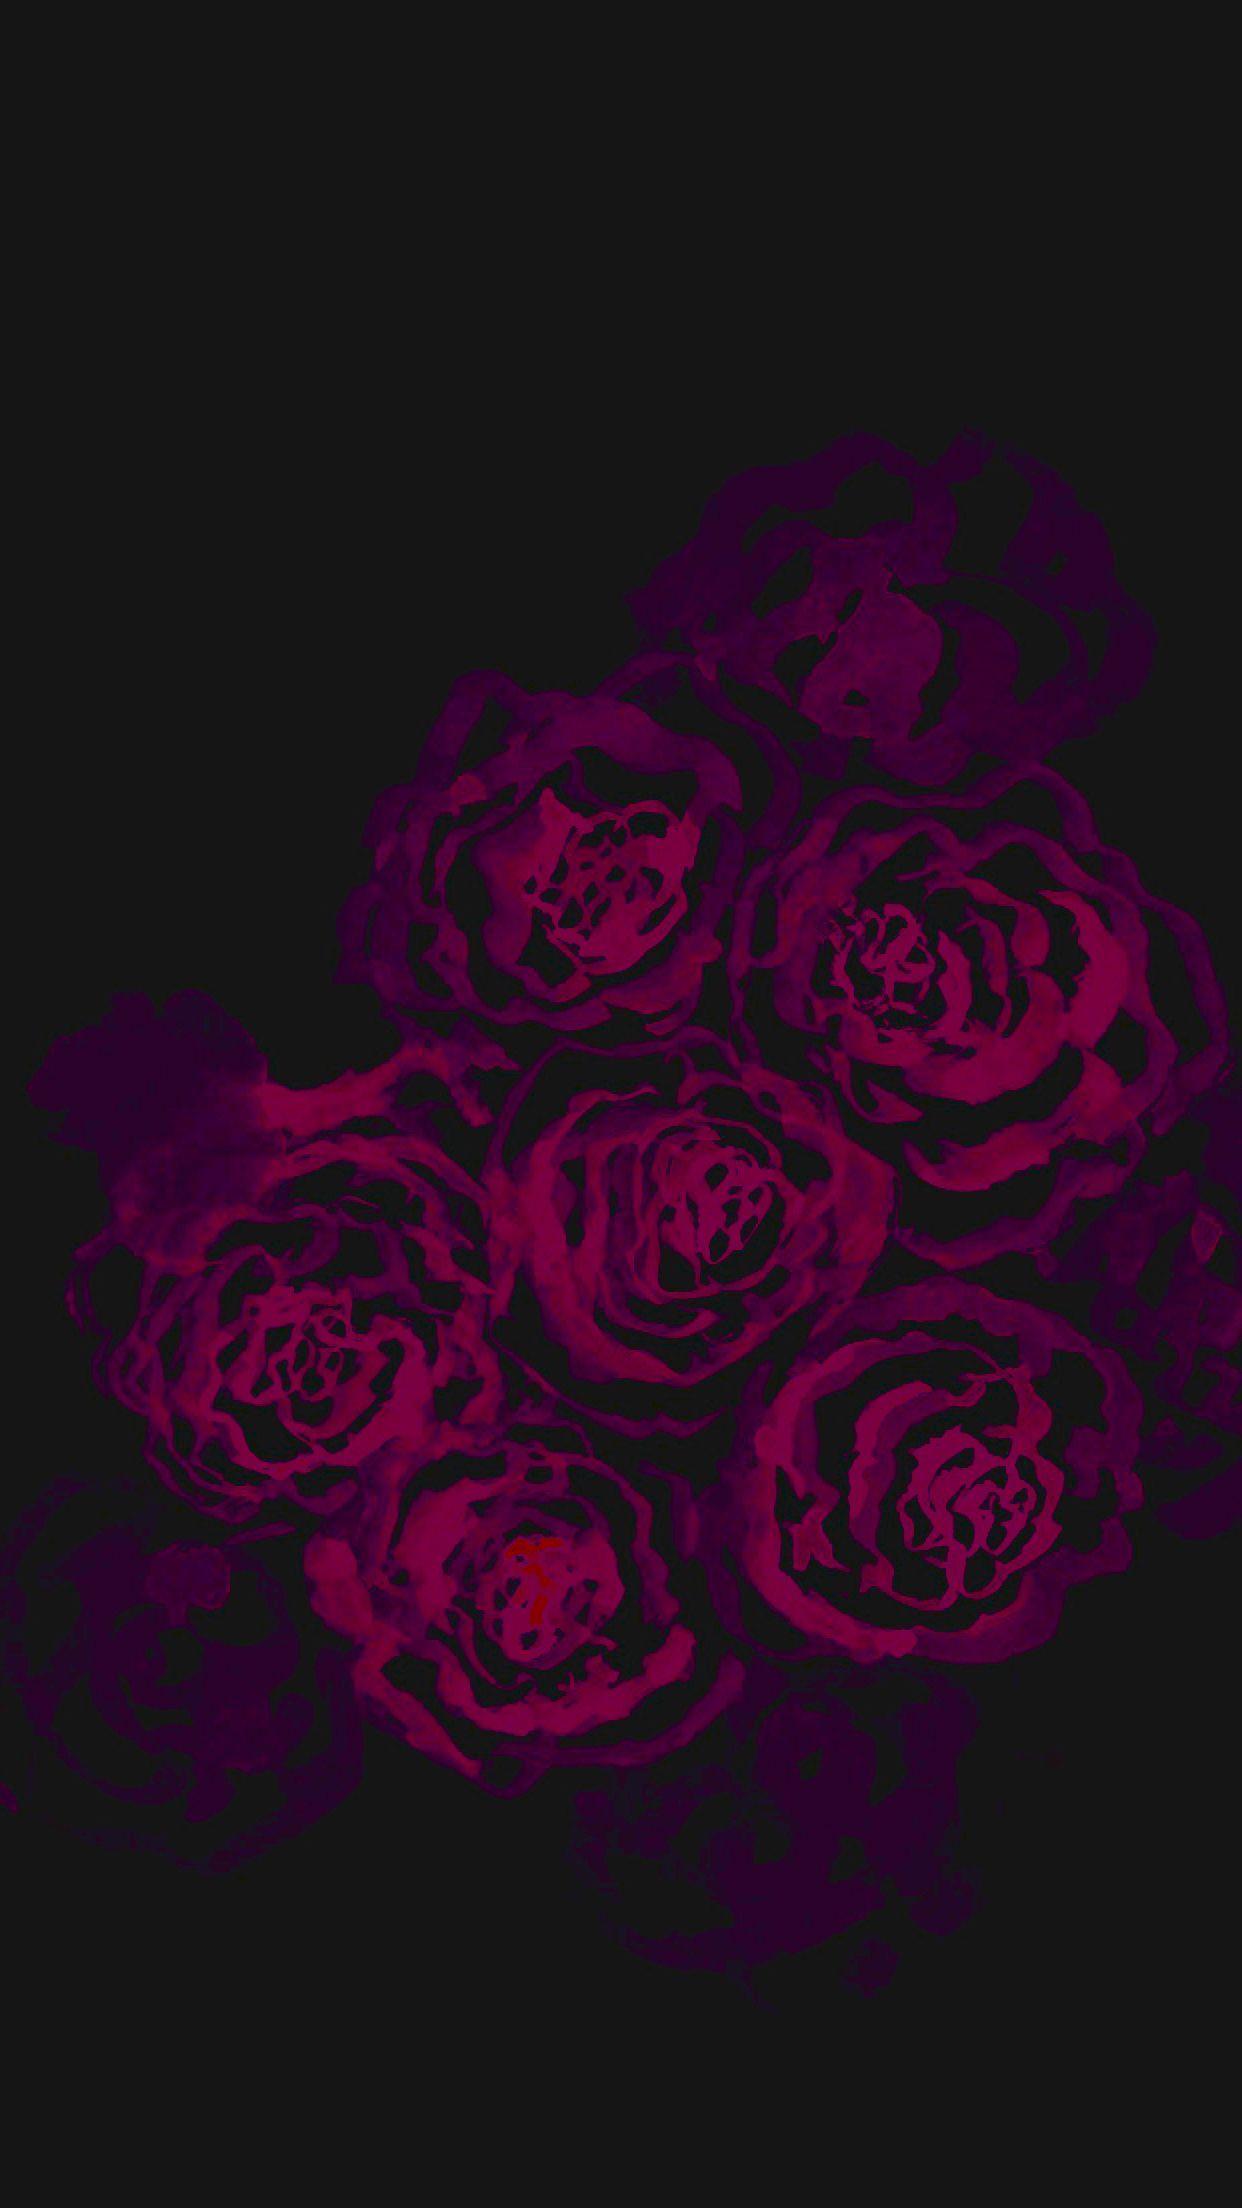 Фон на телефон темные цветы. Цветы на темном фоне. Темные цветы. Цветы на черном фоне. Малиновые цветы на черном фоне.